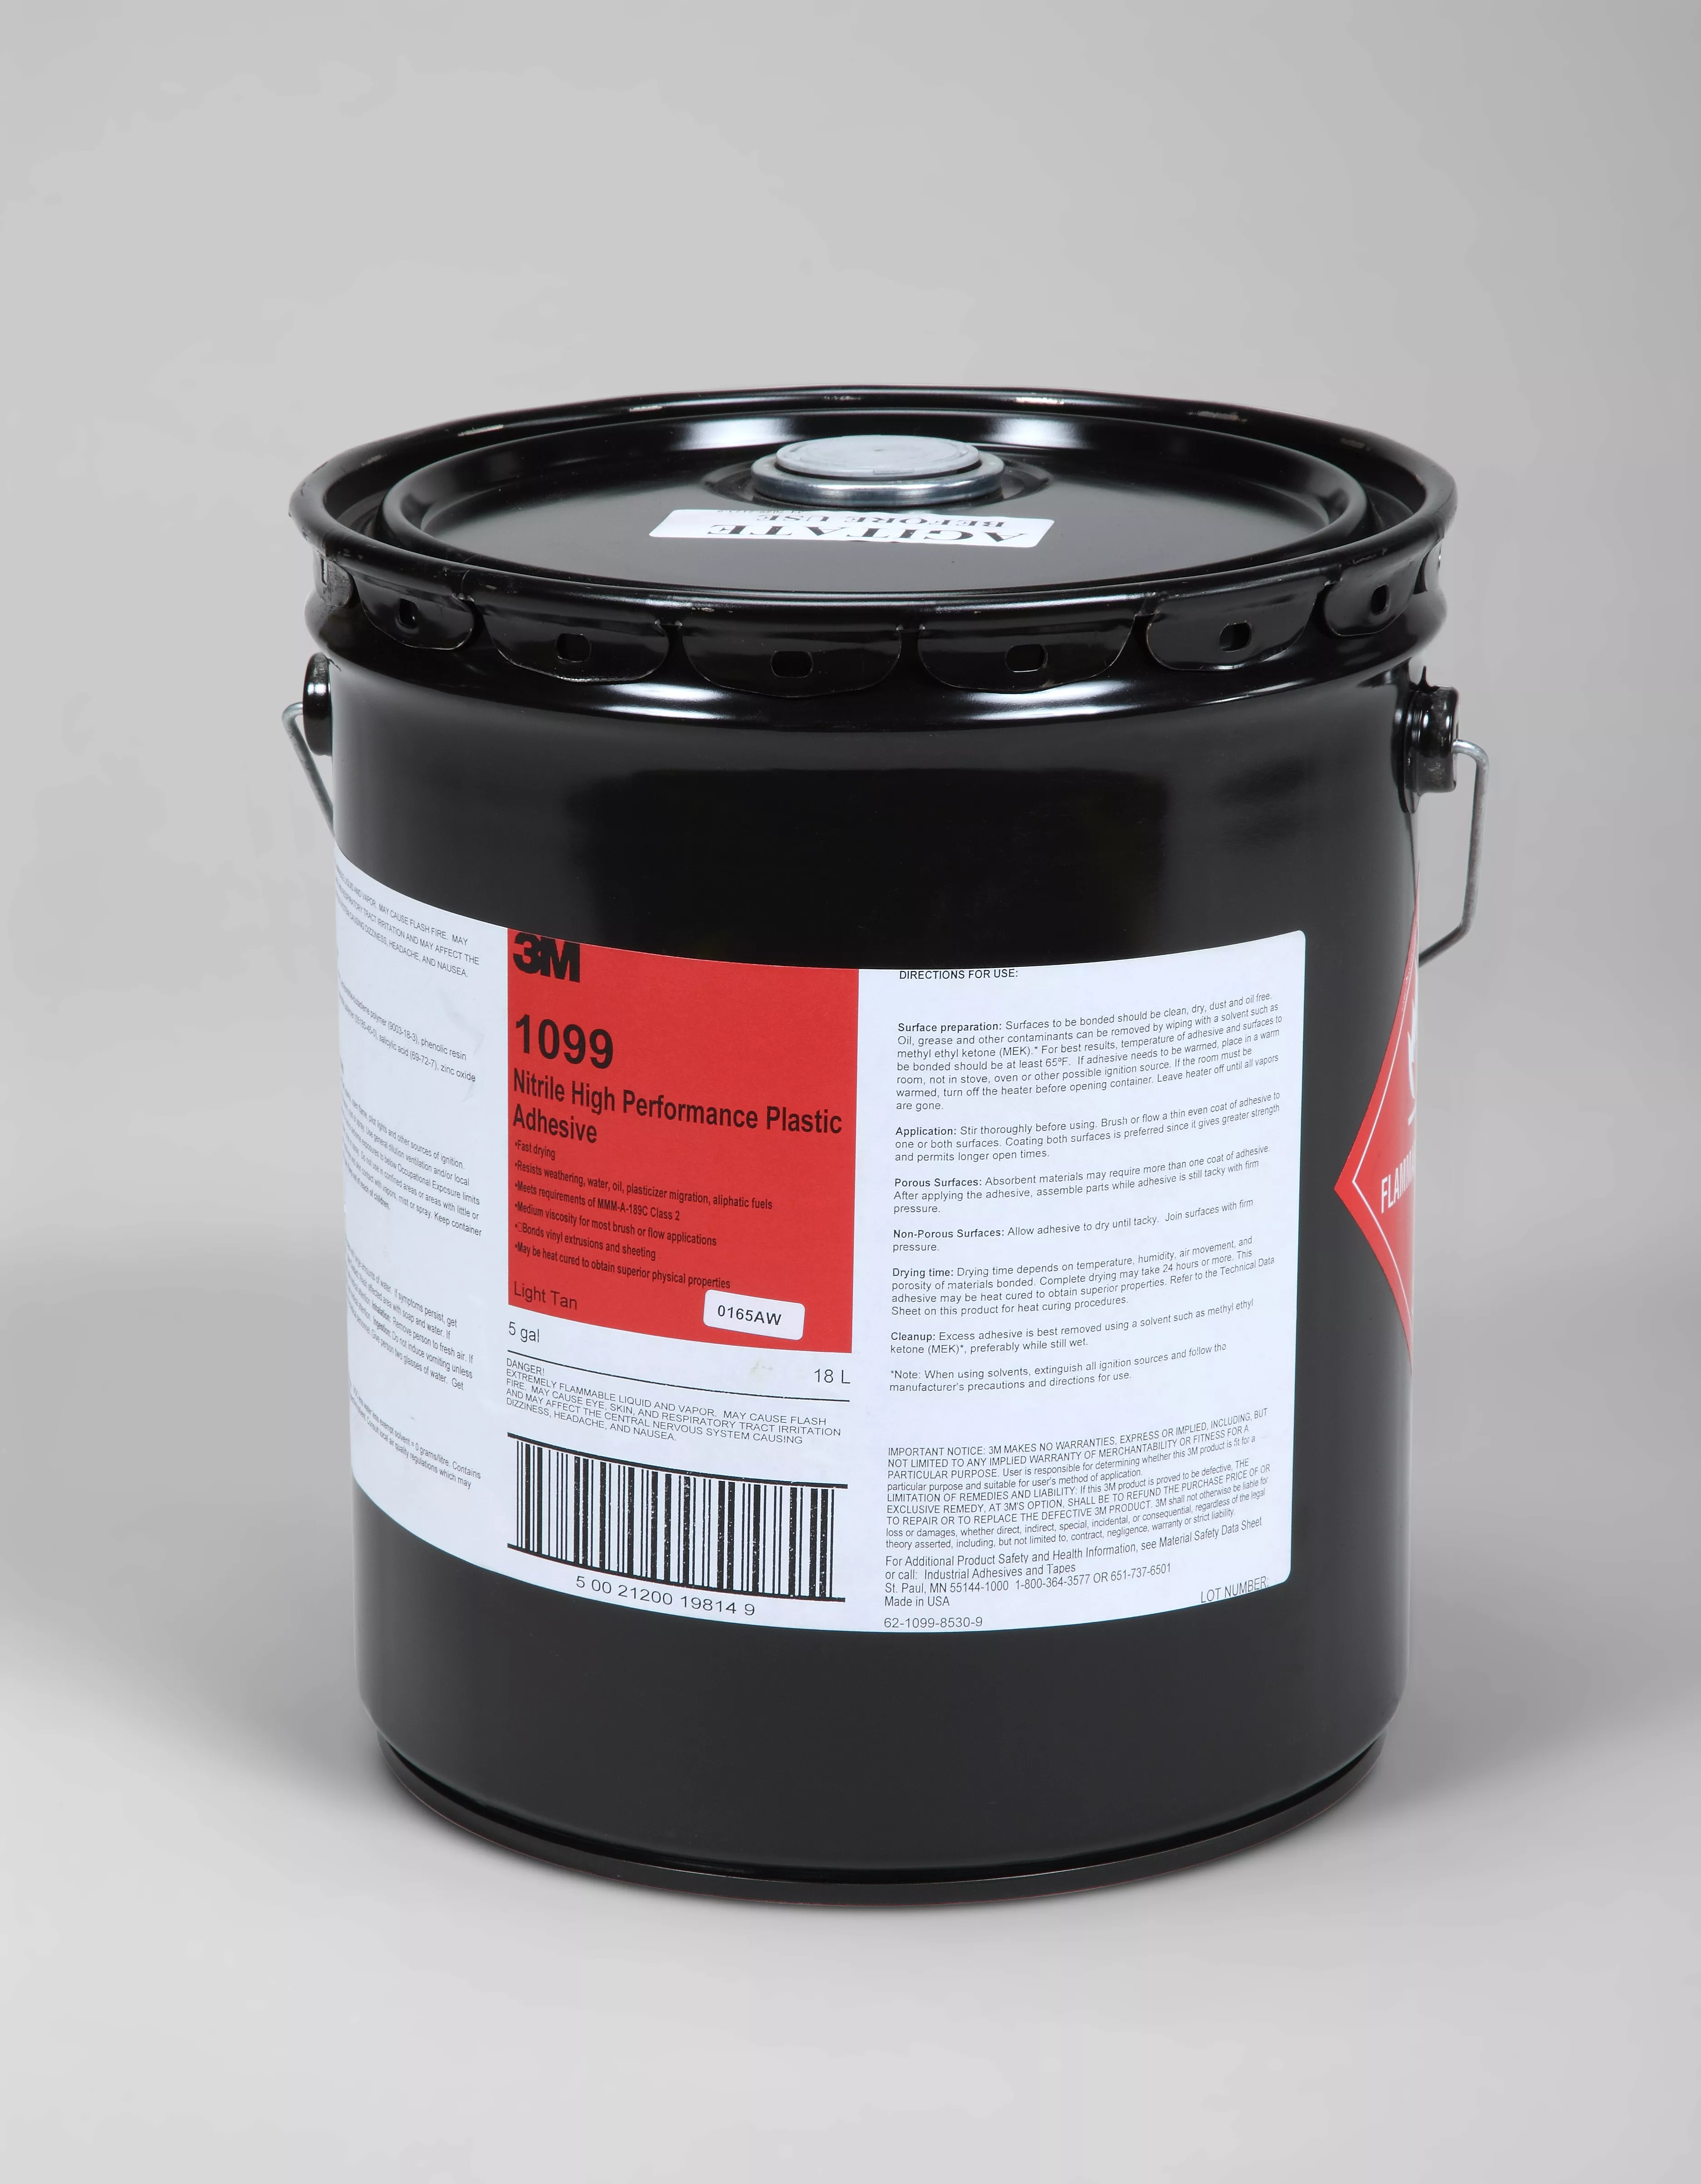 SKU 7000000798 | 3M™ Nitrile High Performance Plastic Adhesive 1099